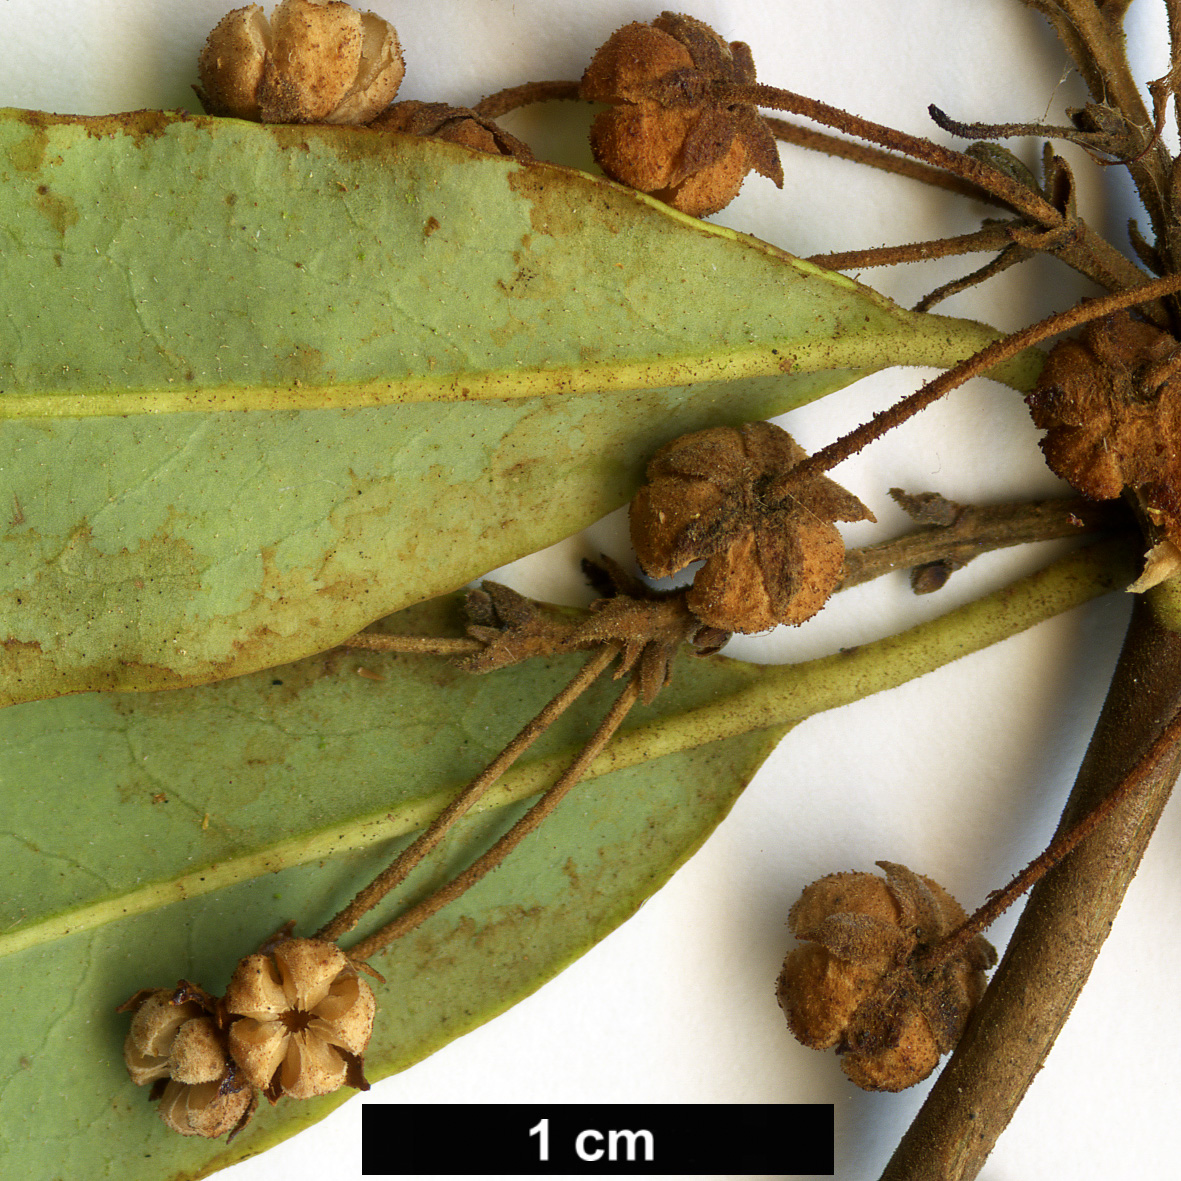 High resolution image: Family: Ericaceae - Genus: Kalmia - Taxon: angustifolia - SpeciesSub: f. rubra